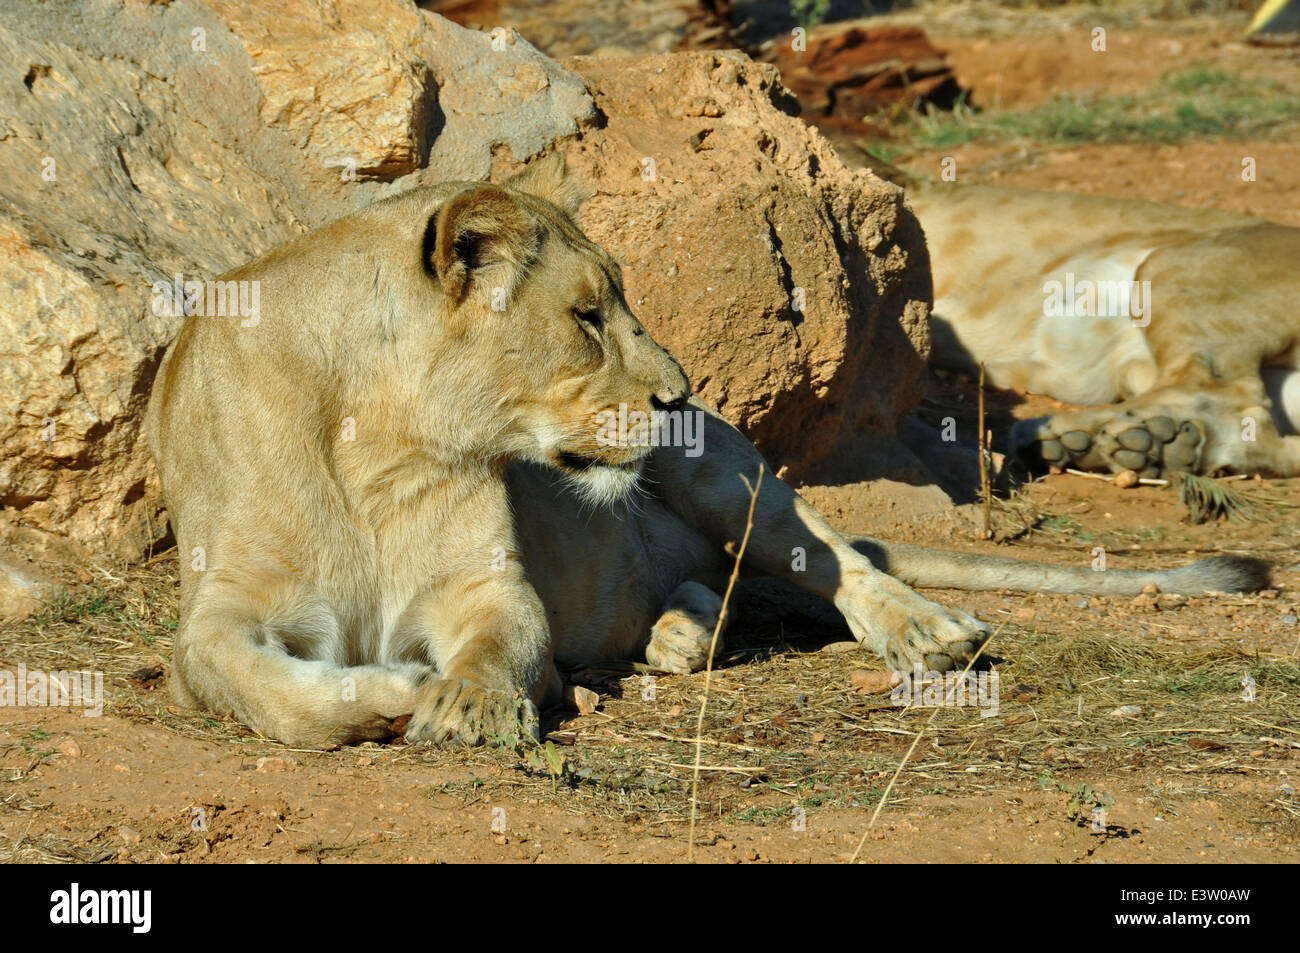 Southwest african lioness resting. Wild mammal animal. Stock Photo